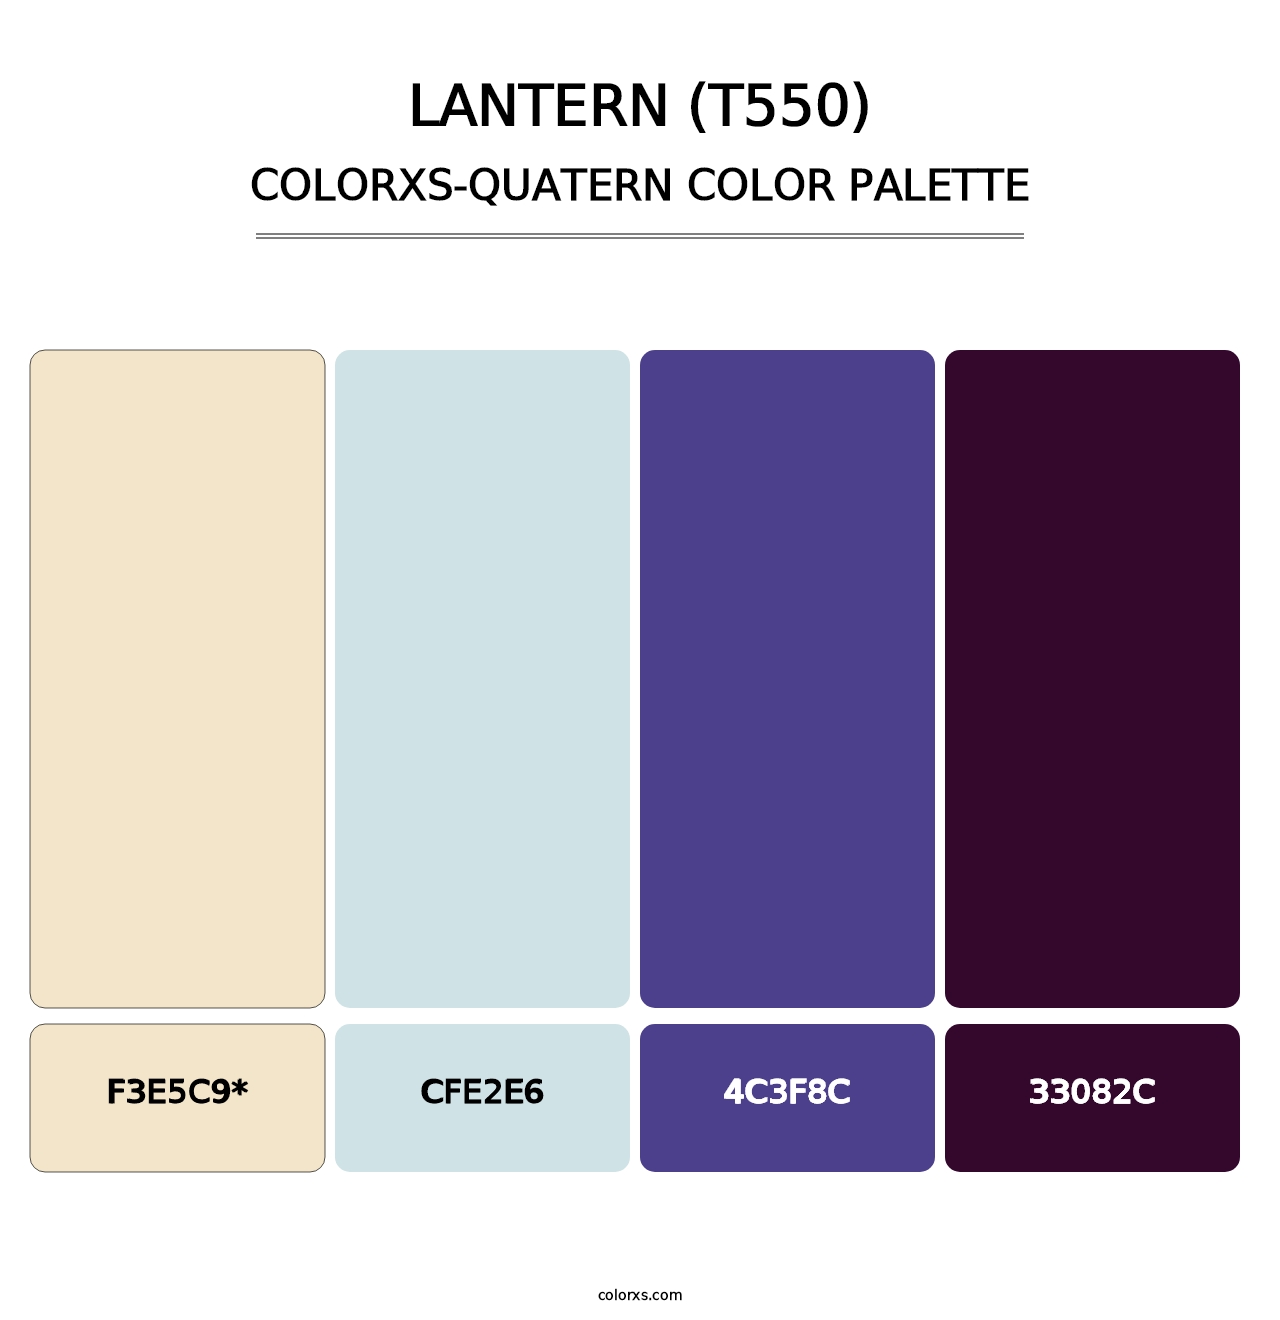 Lantern (T550) - Colorxs Quatern Palette